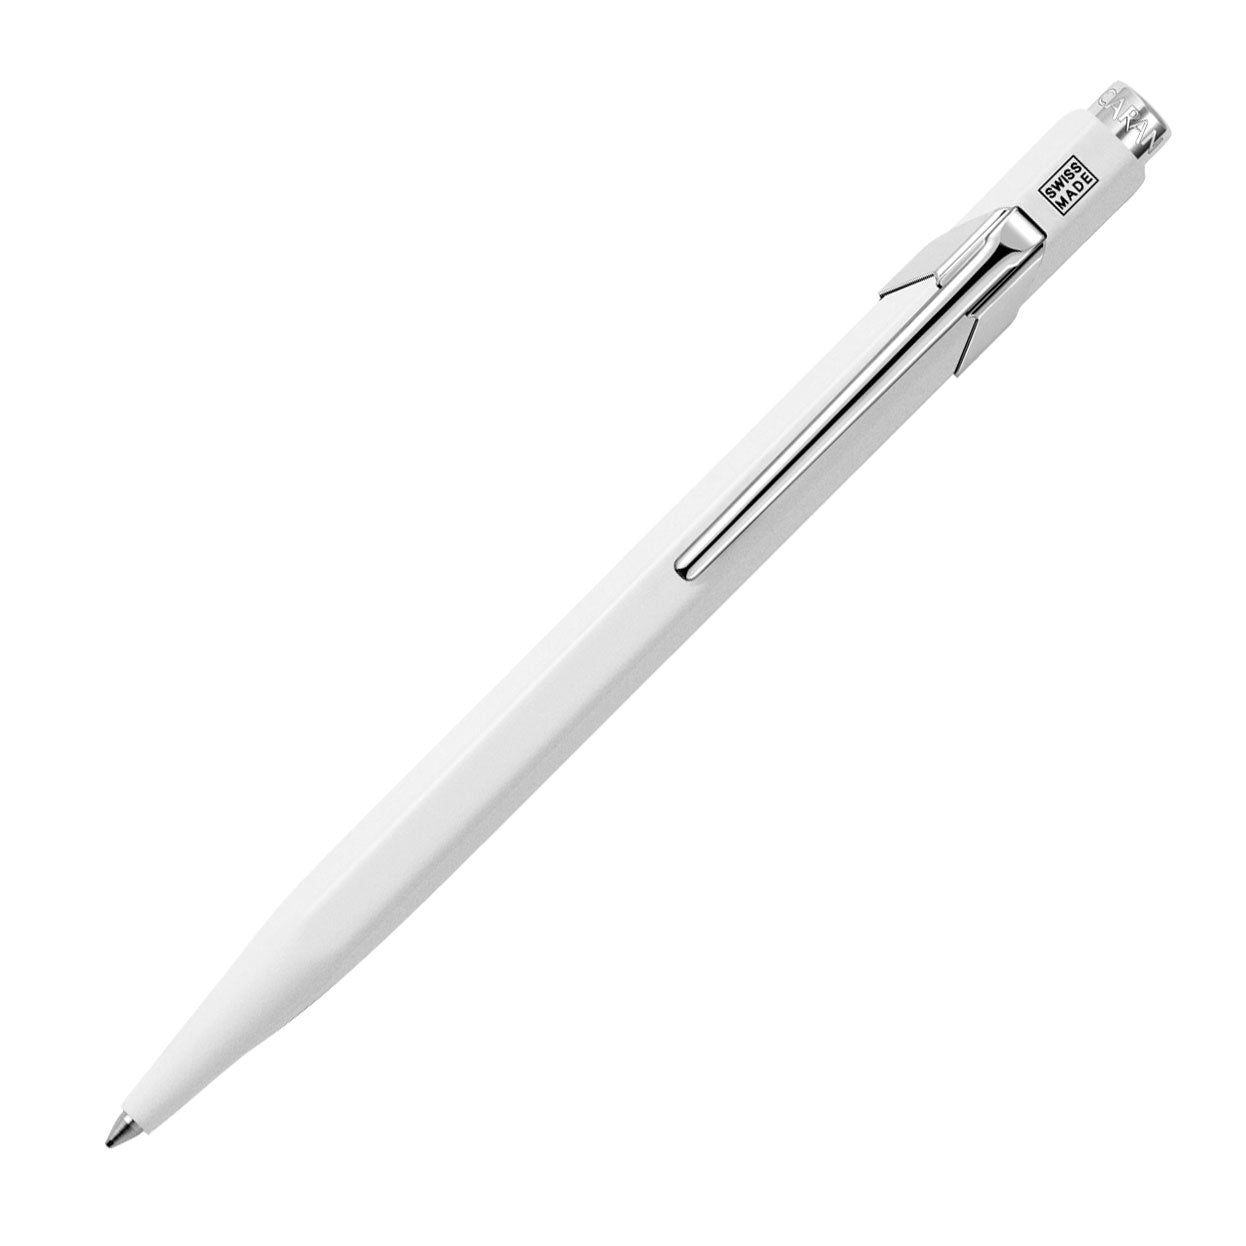 Caran d'Ache 849 Metal Collection Ballpoint Pen in White